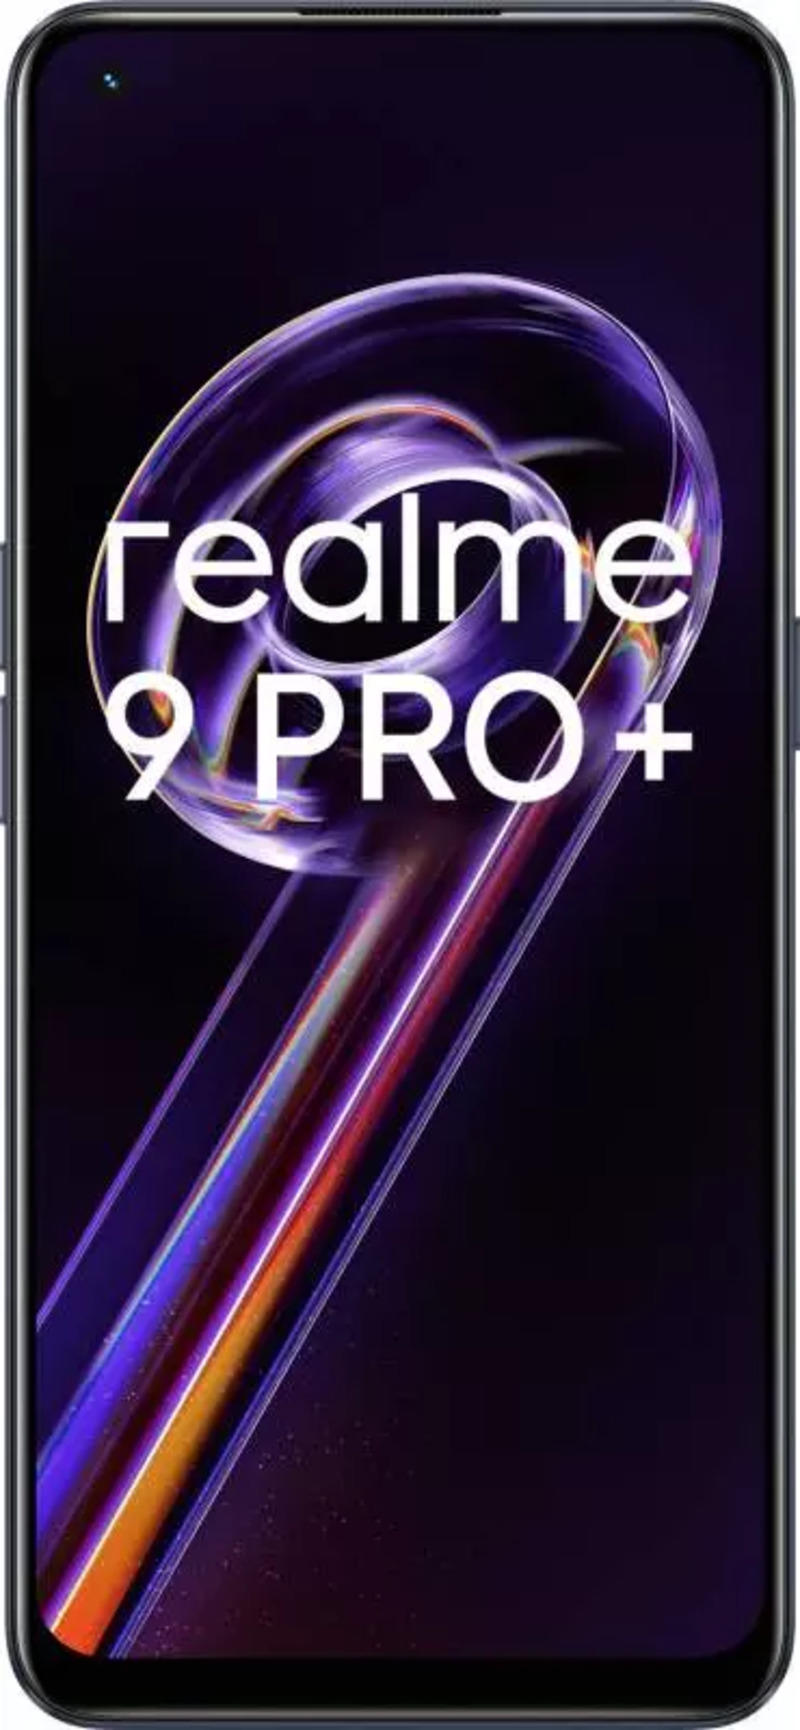 Realme GT Neo 3 (8GB/12GB RAM + 256GB ROM) Smartphone - Original 1 Year  Warranty By REALME Malaysia (MY SET)